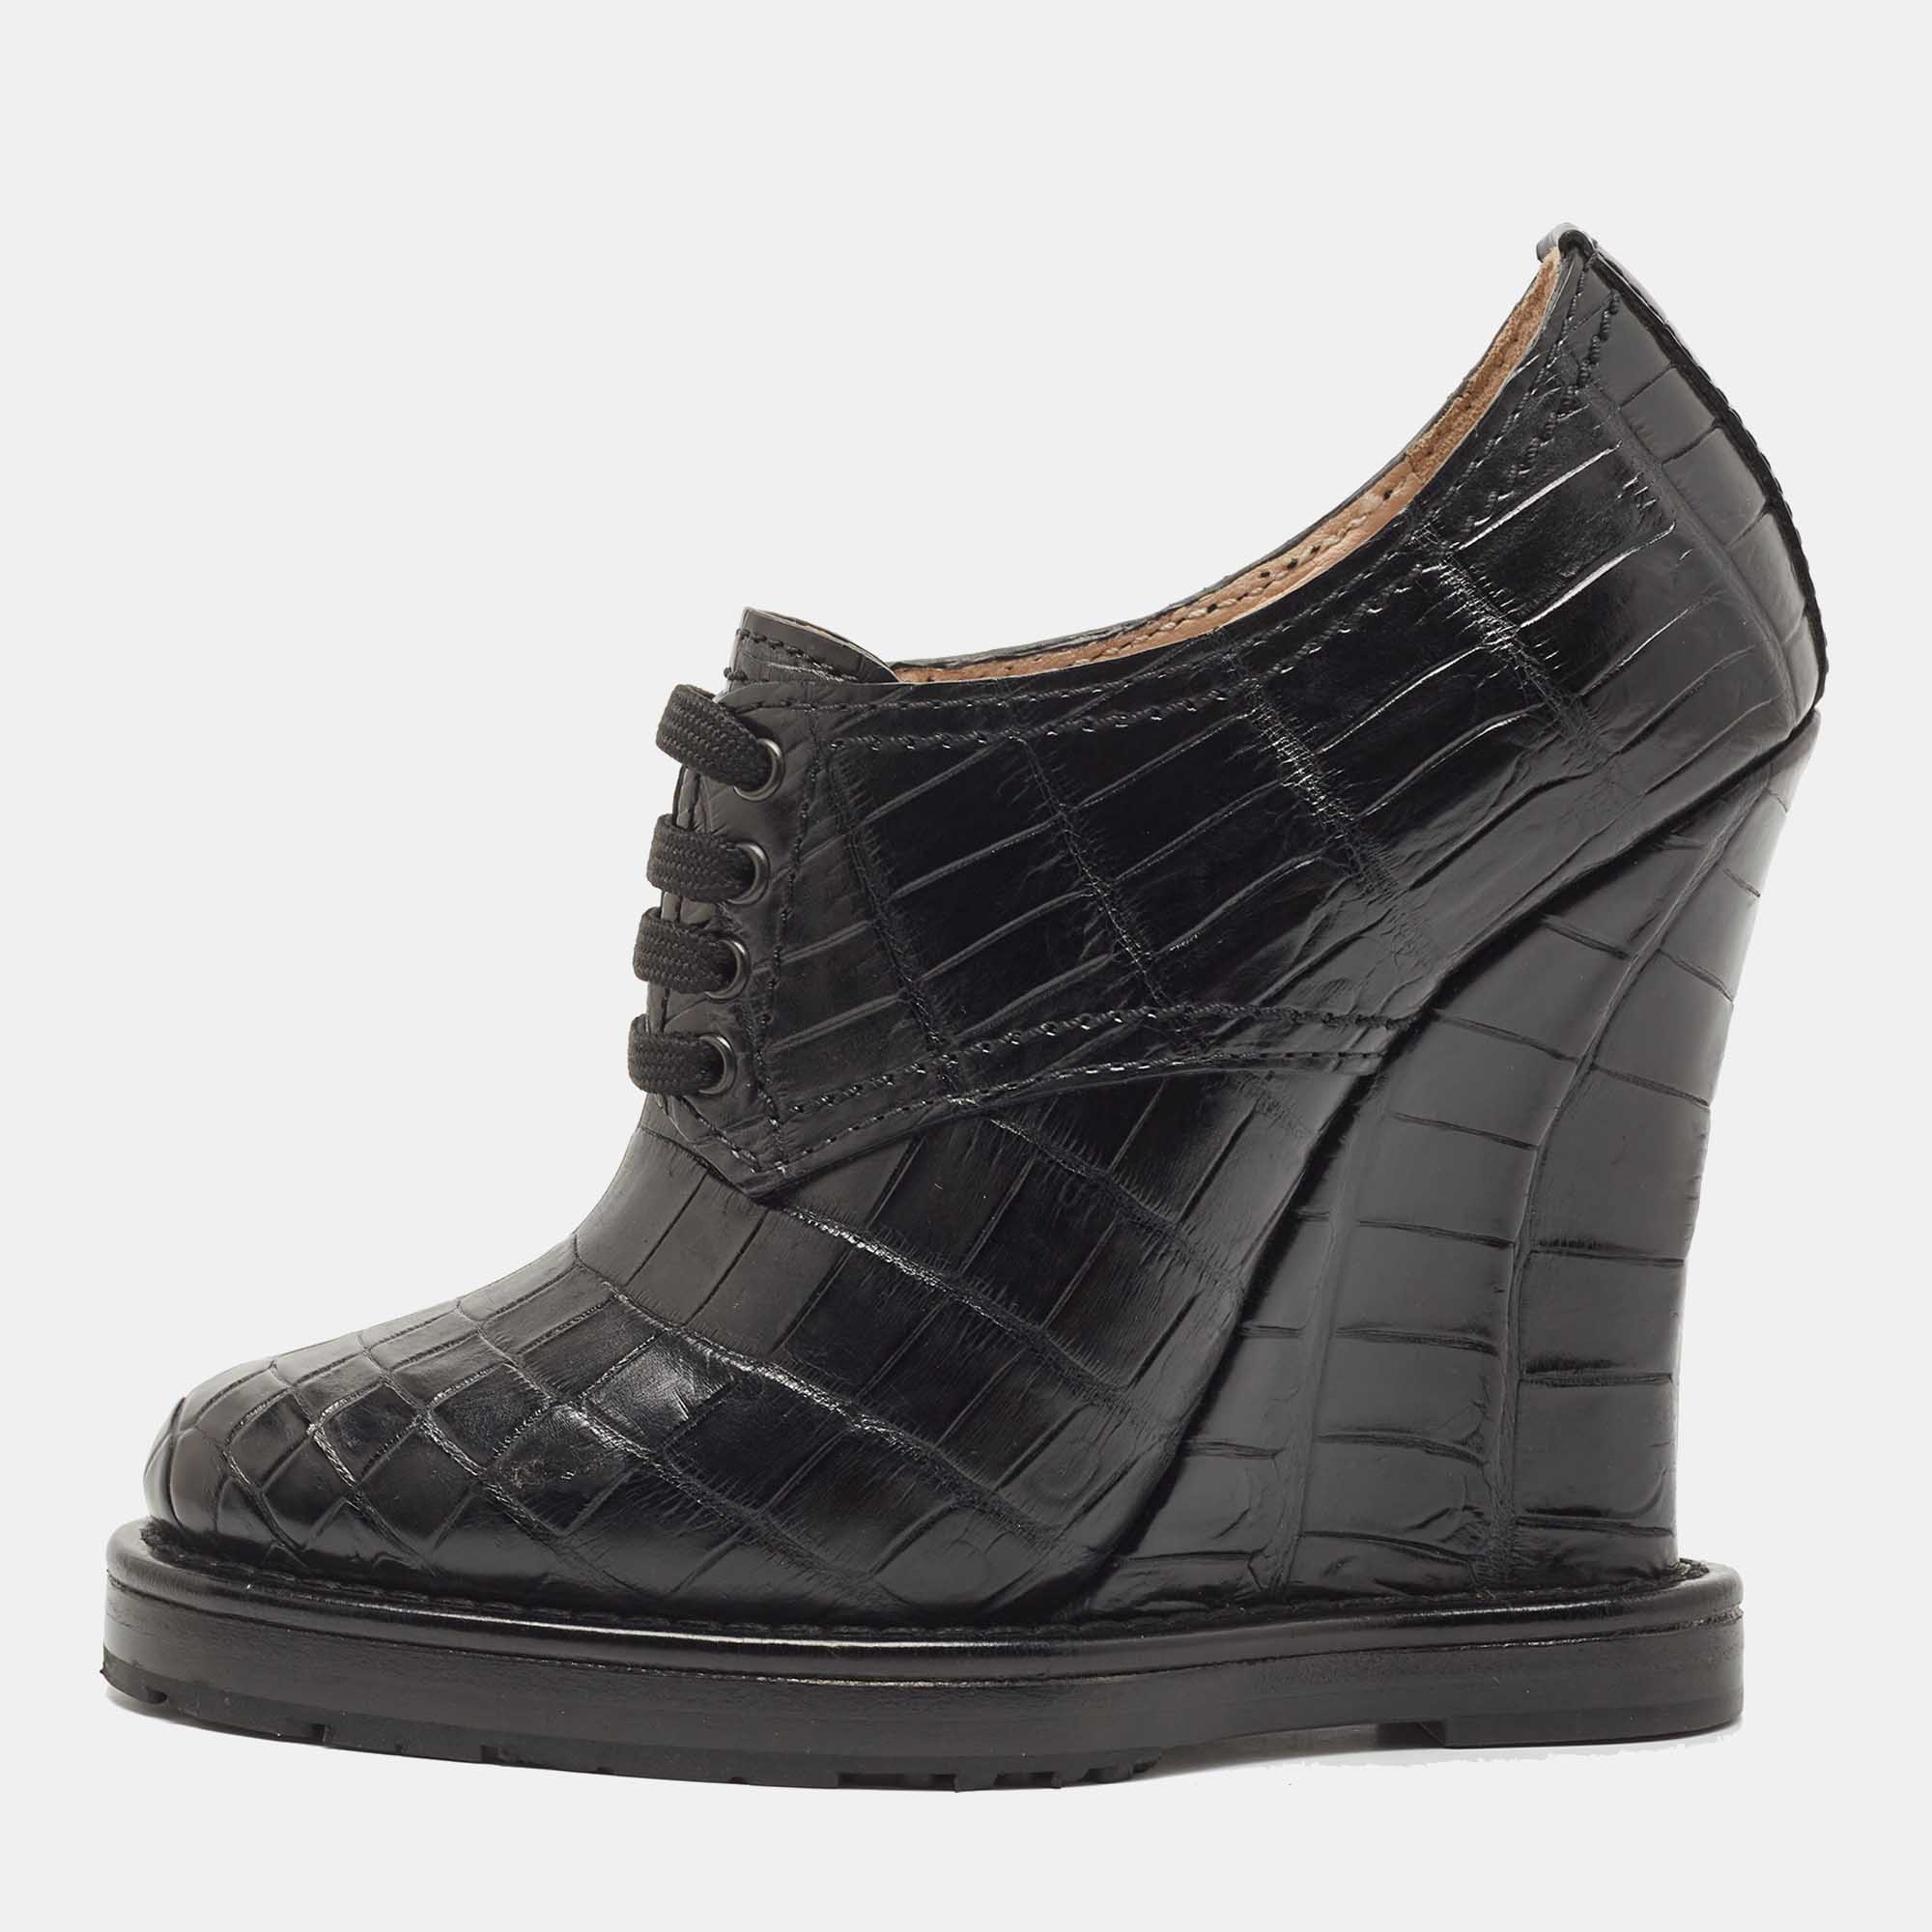 Pre-owned Bottega Veneta Black Croc Embossed Leather Wedge Oxford Pumps Size 37